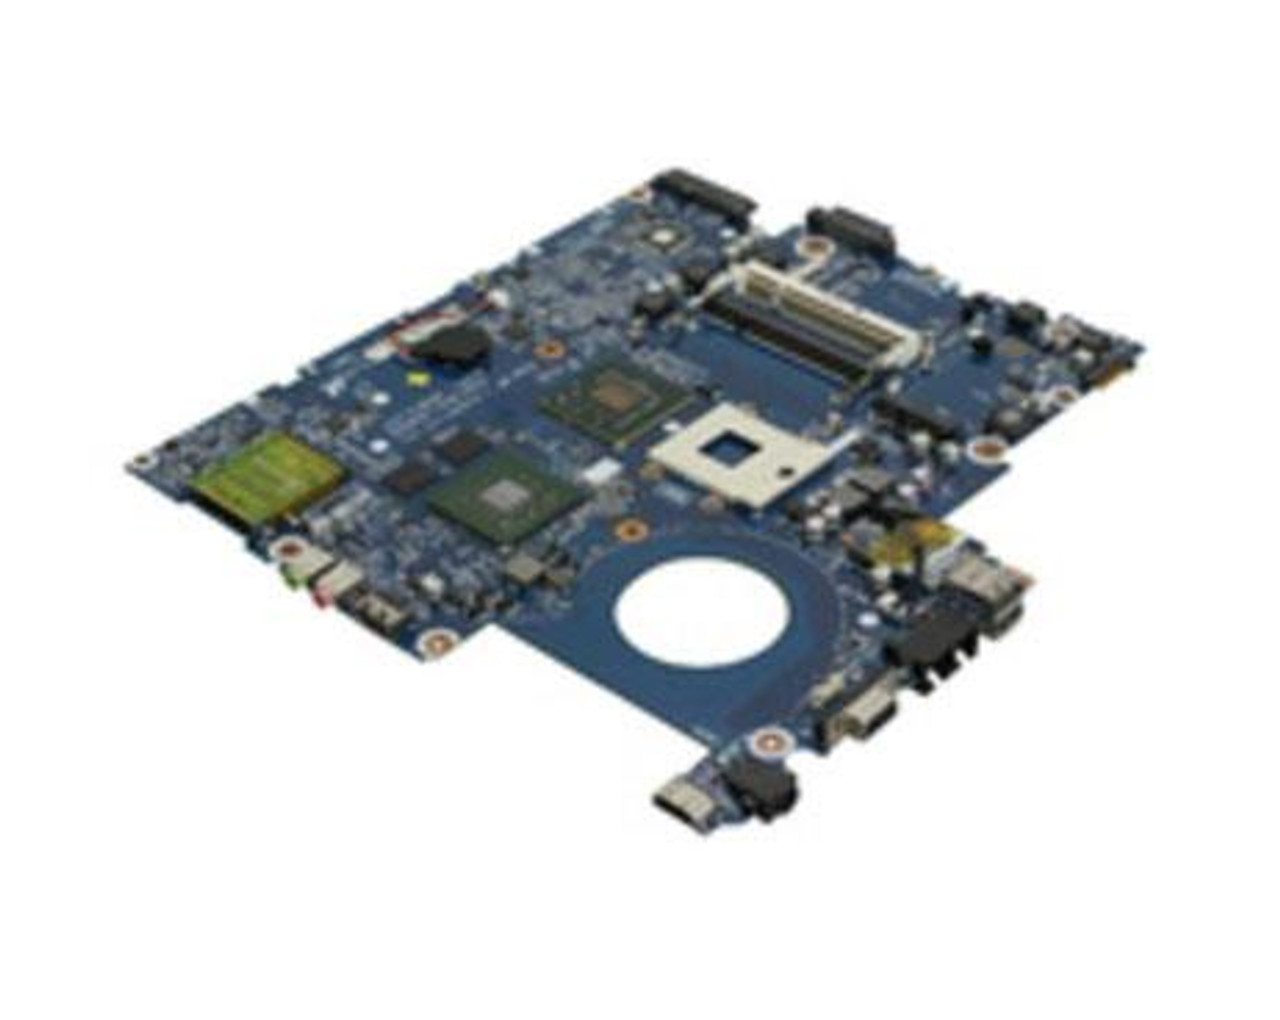 BA92-05151A Samsung System Board (Motherboard) for R510 Notebook (Refurbished)